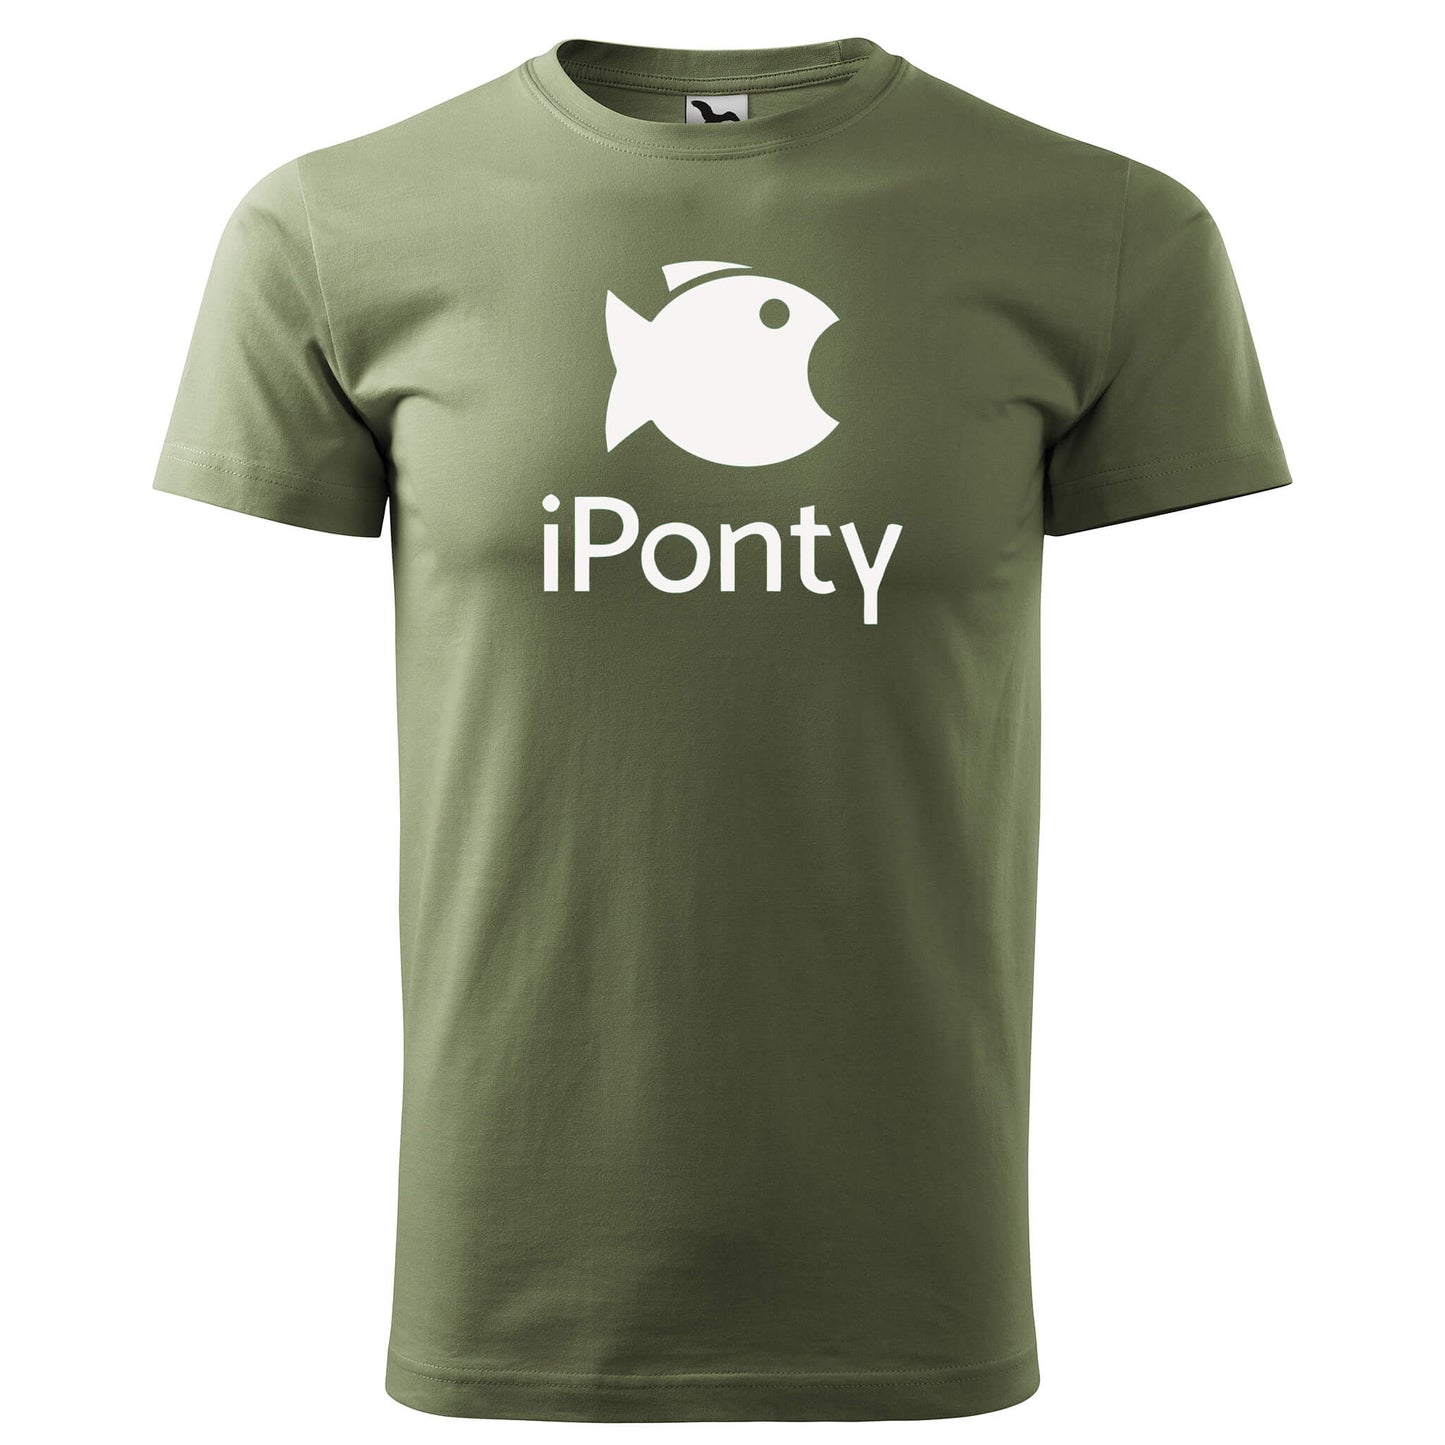 T-shirt - iPonty - rvdesignprint